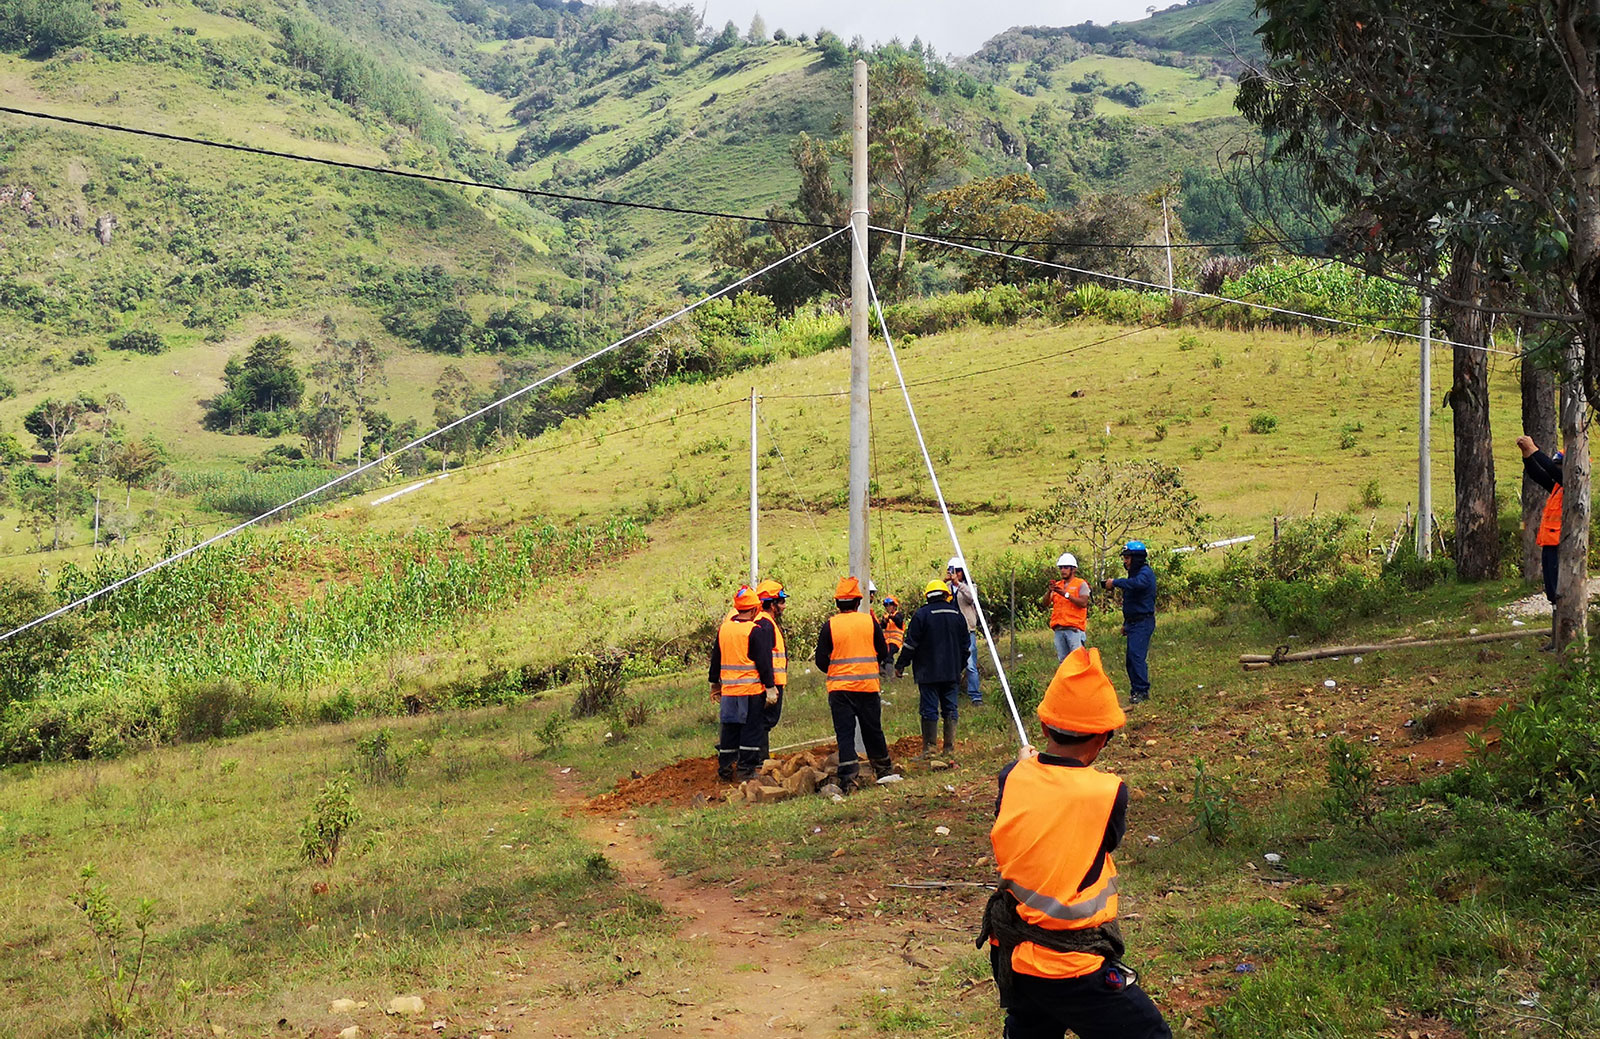 Montaje manual de postes para electrificación rural en Santa Cruz
Cajamarca